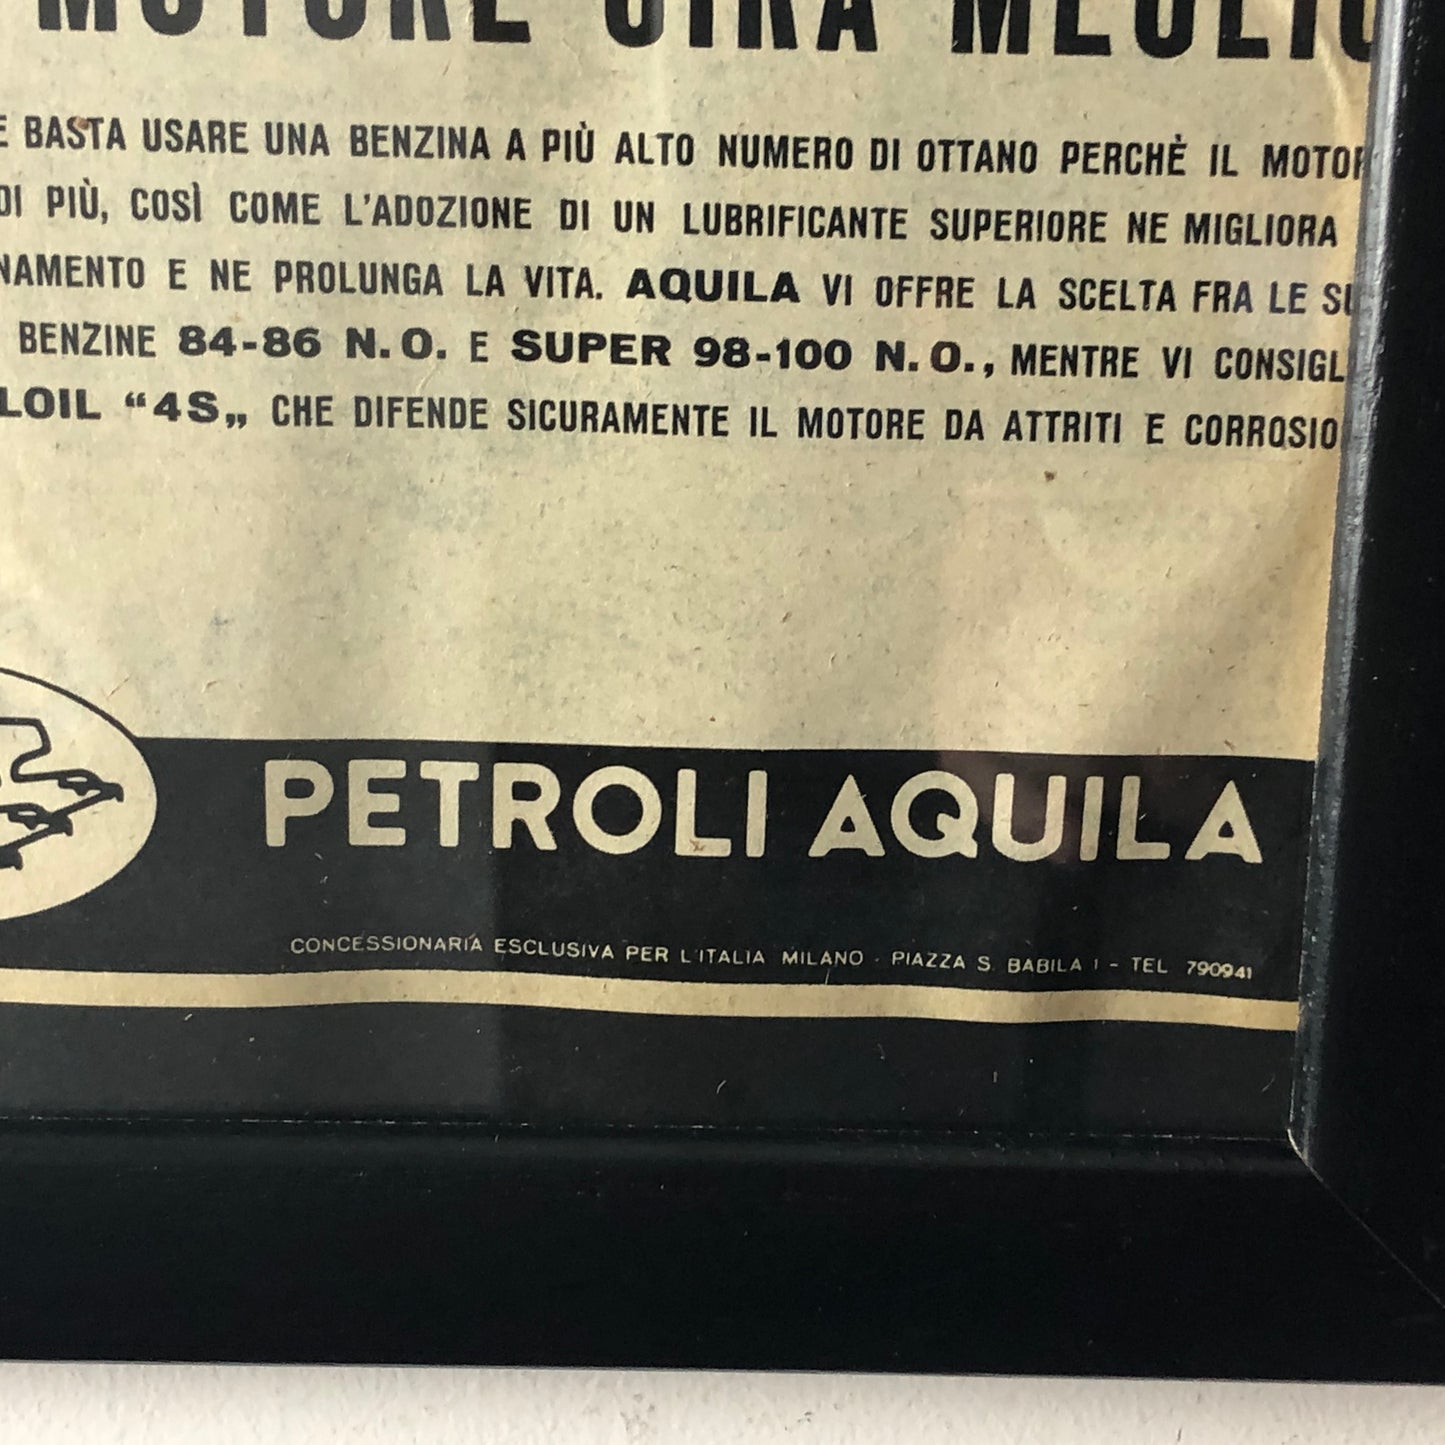 Aquila Raffineria Oli Minerali Trieste, Pubblicità Anno 1960 Aquiloil Petroli Aquila